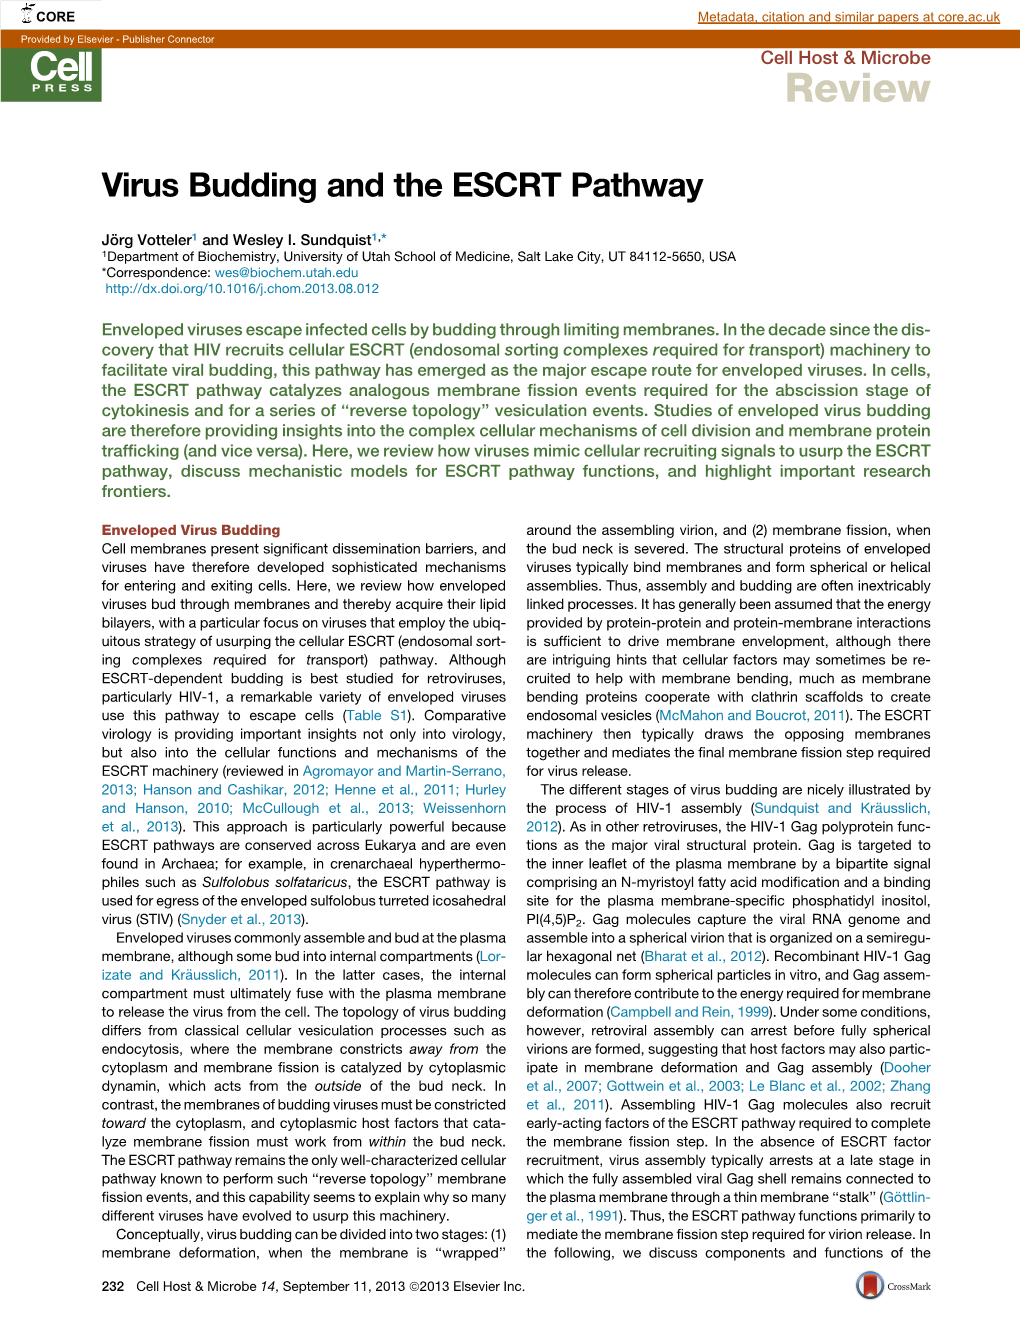 Virus Budding and the ESCRT Pathway